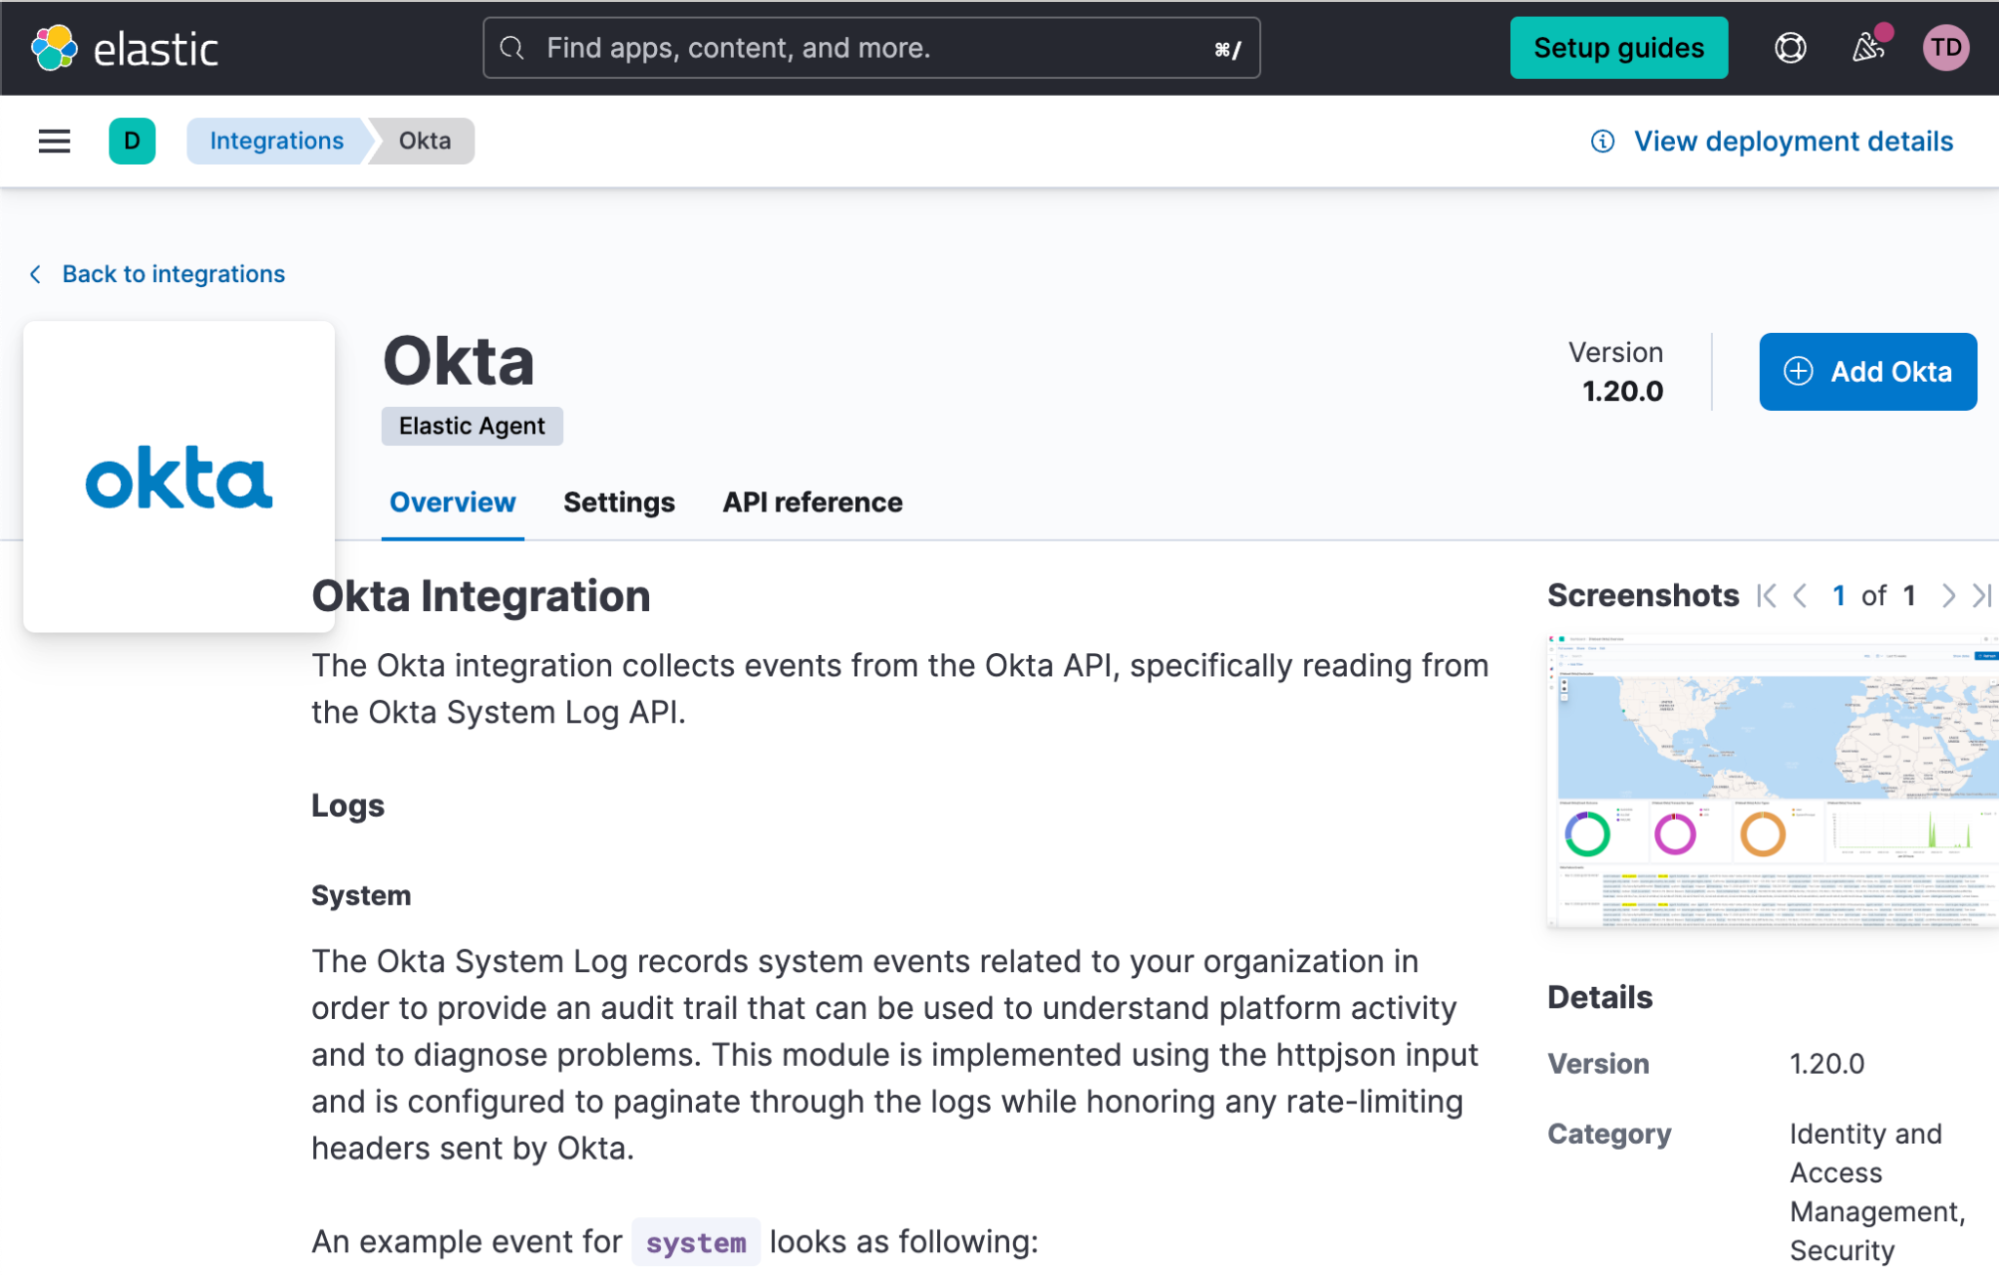 The Okta Integration page